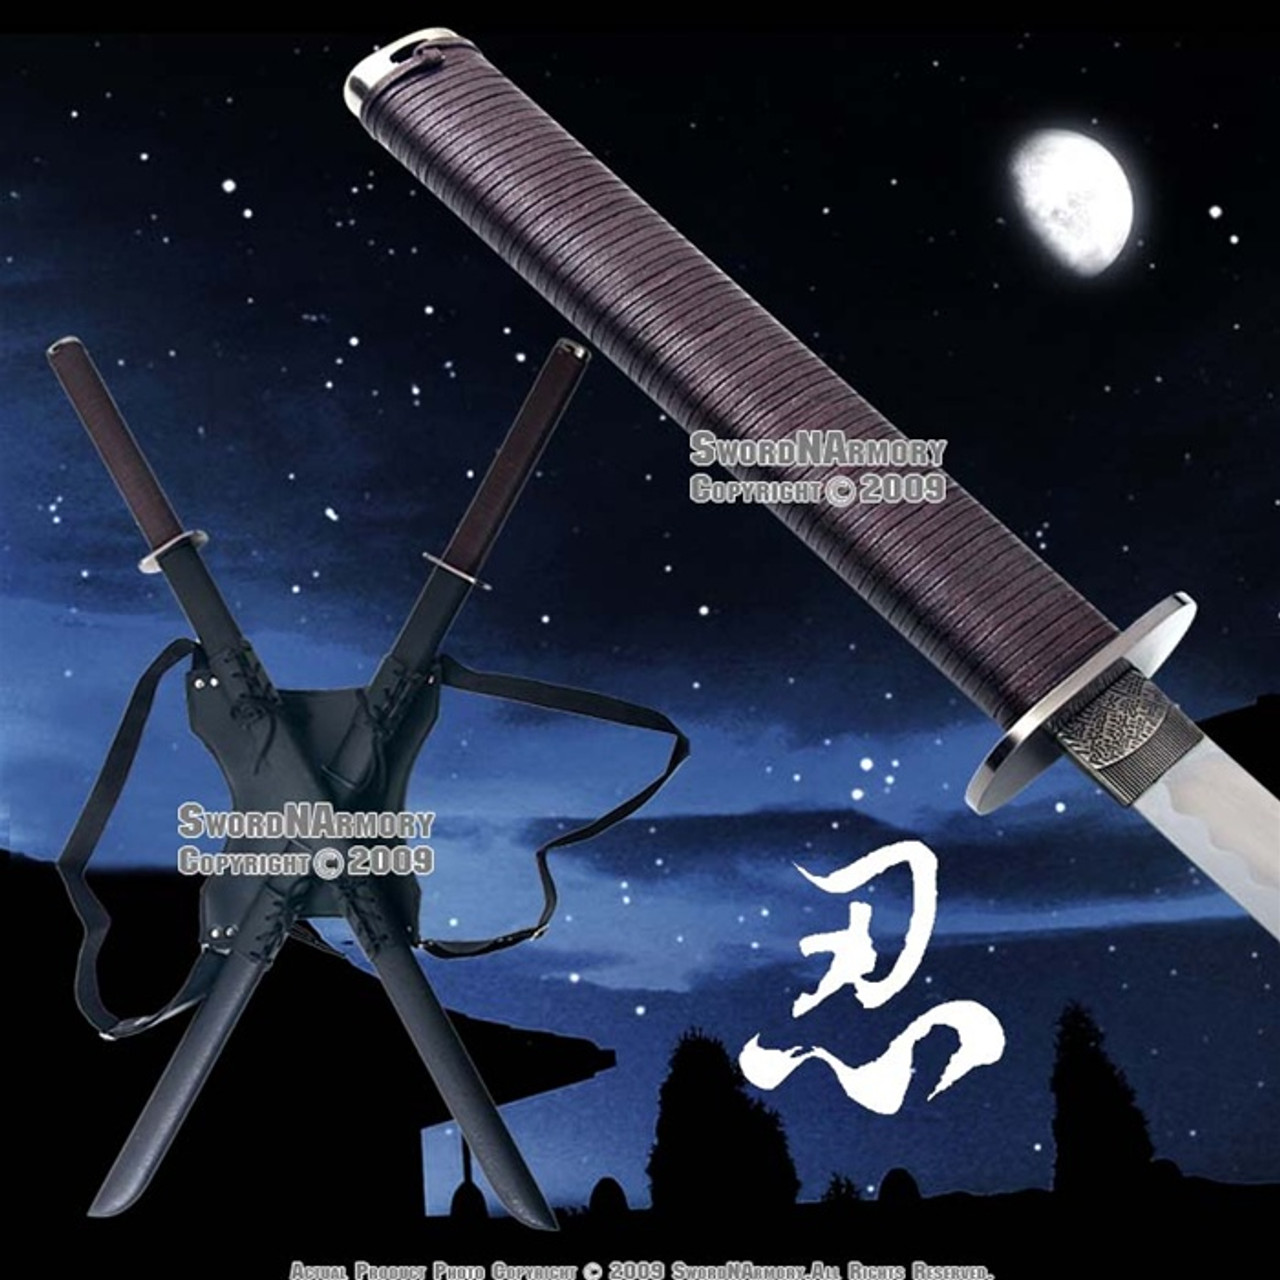 Dual Wielding Ninja Swords with Backpack Style Carrier Sheath - Blue